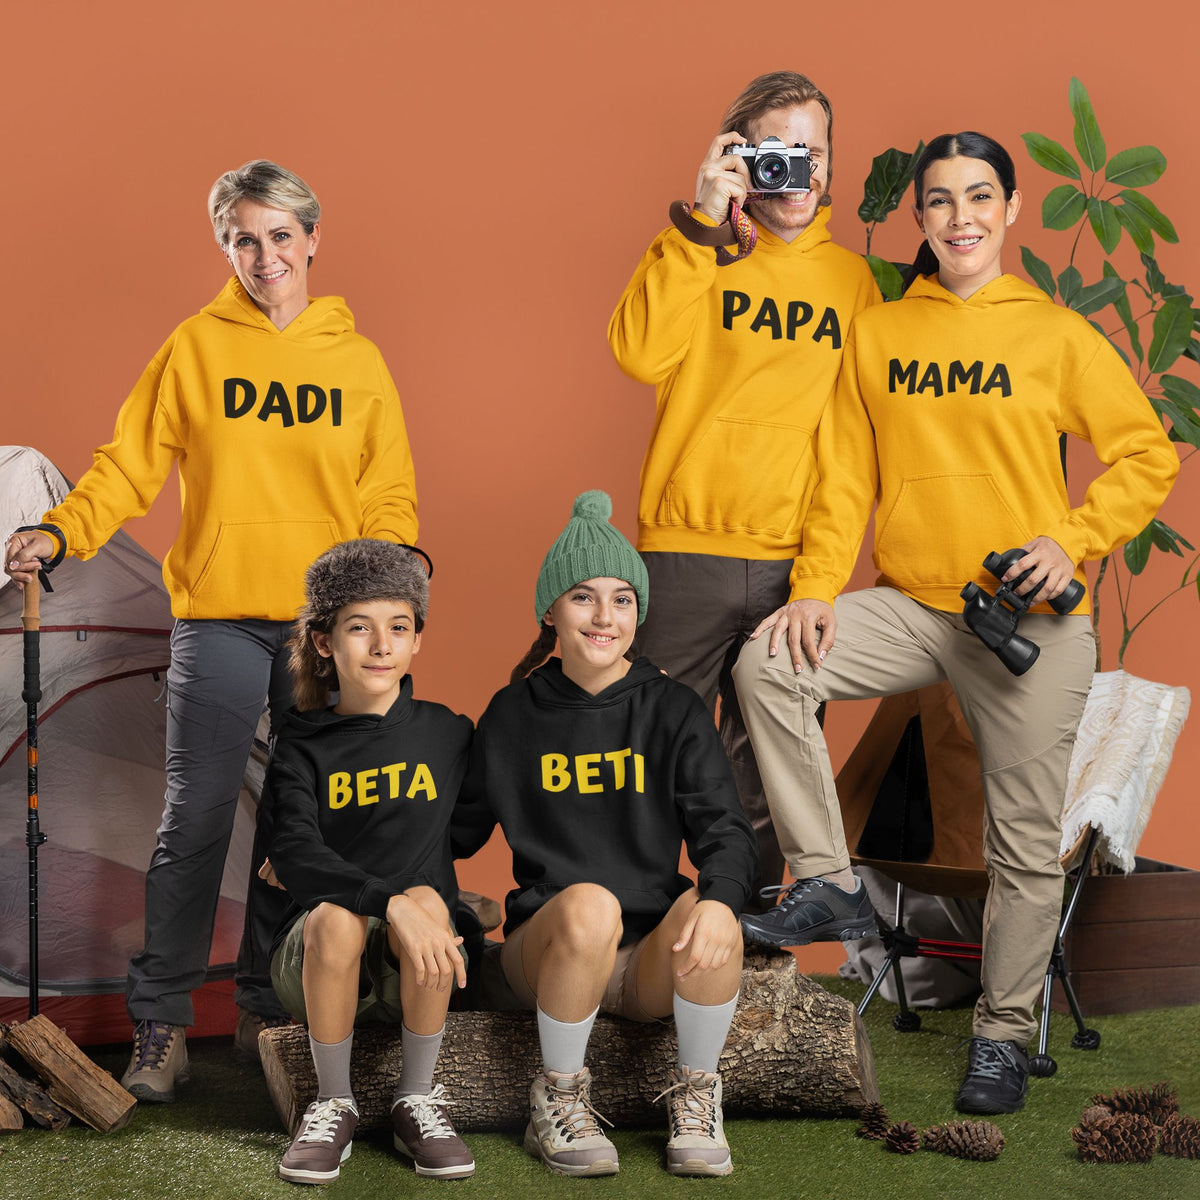 name-personalised-family-hoodies-parents-kids-dada-dadi-matching-hoodies-gogirgit